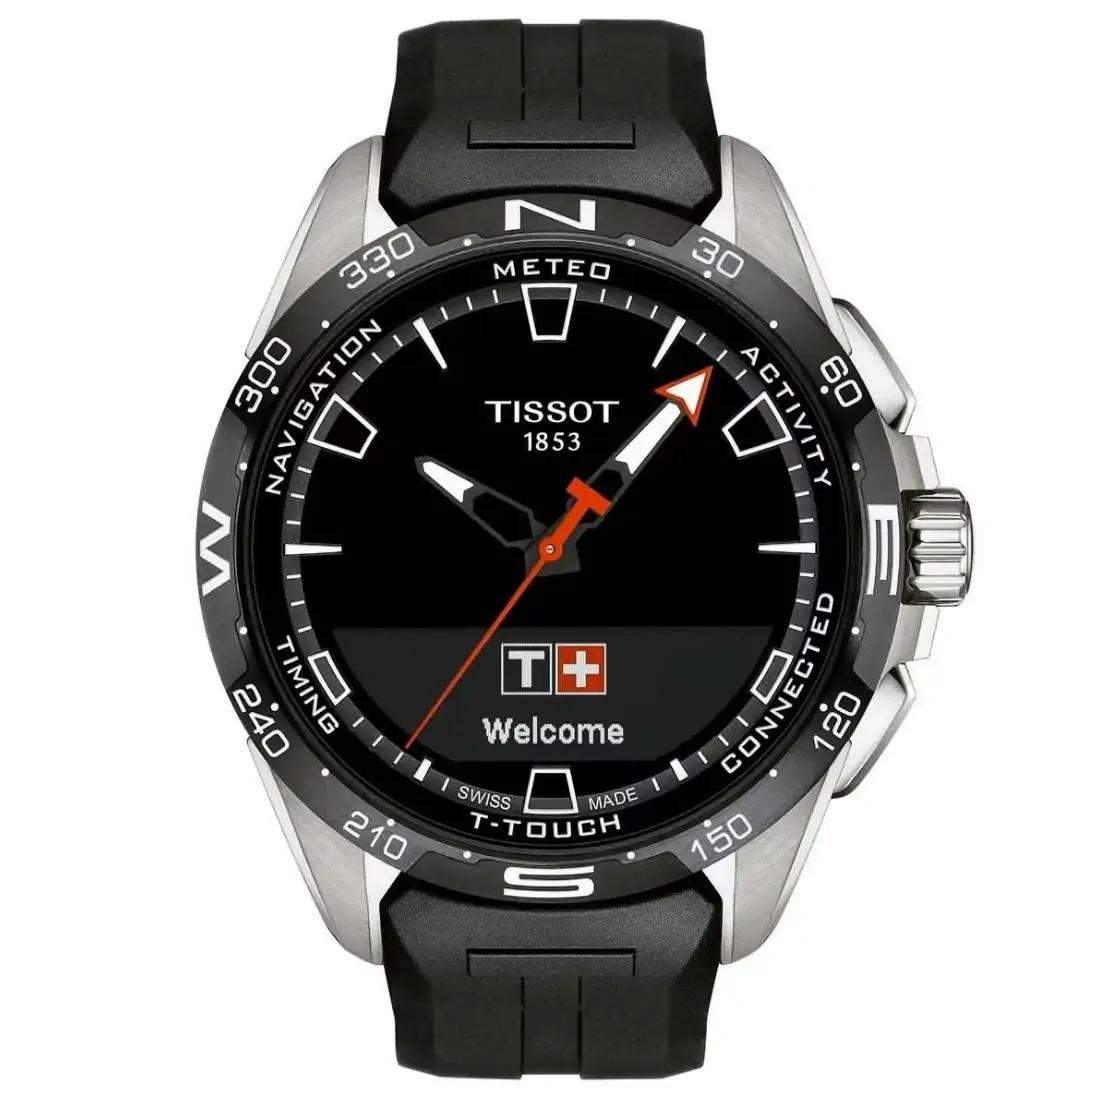 Reloj Tissot T-Touch Connect Solar T121.420.47.051.00